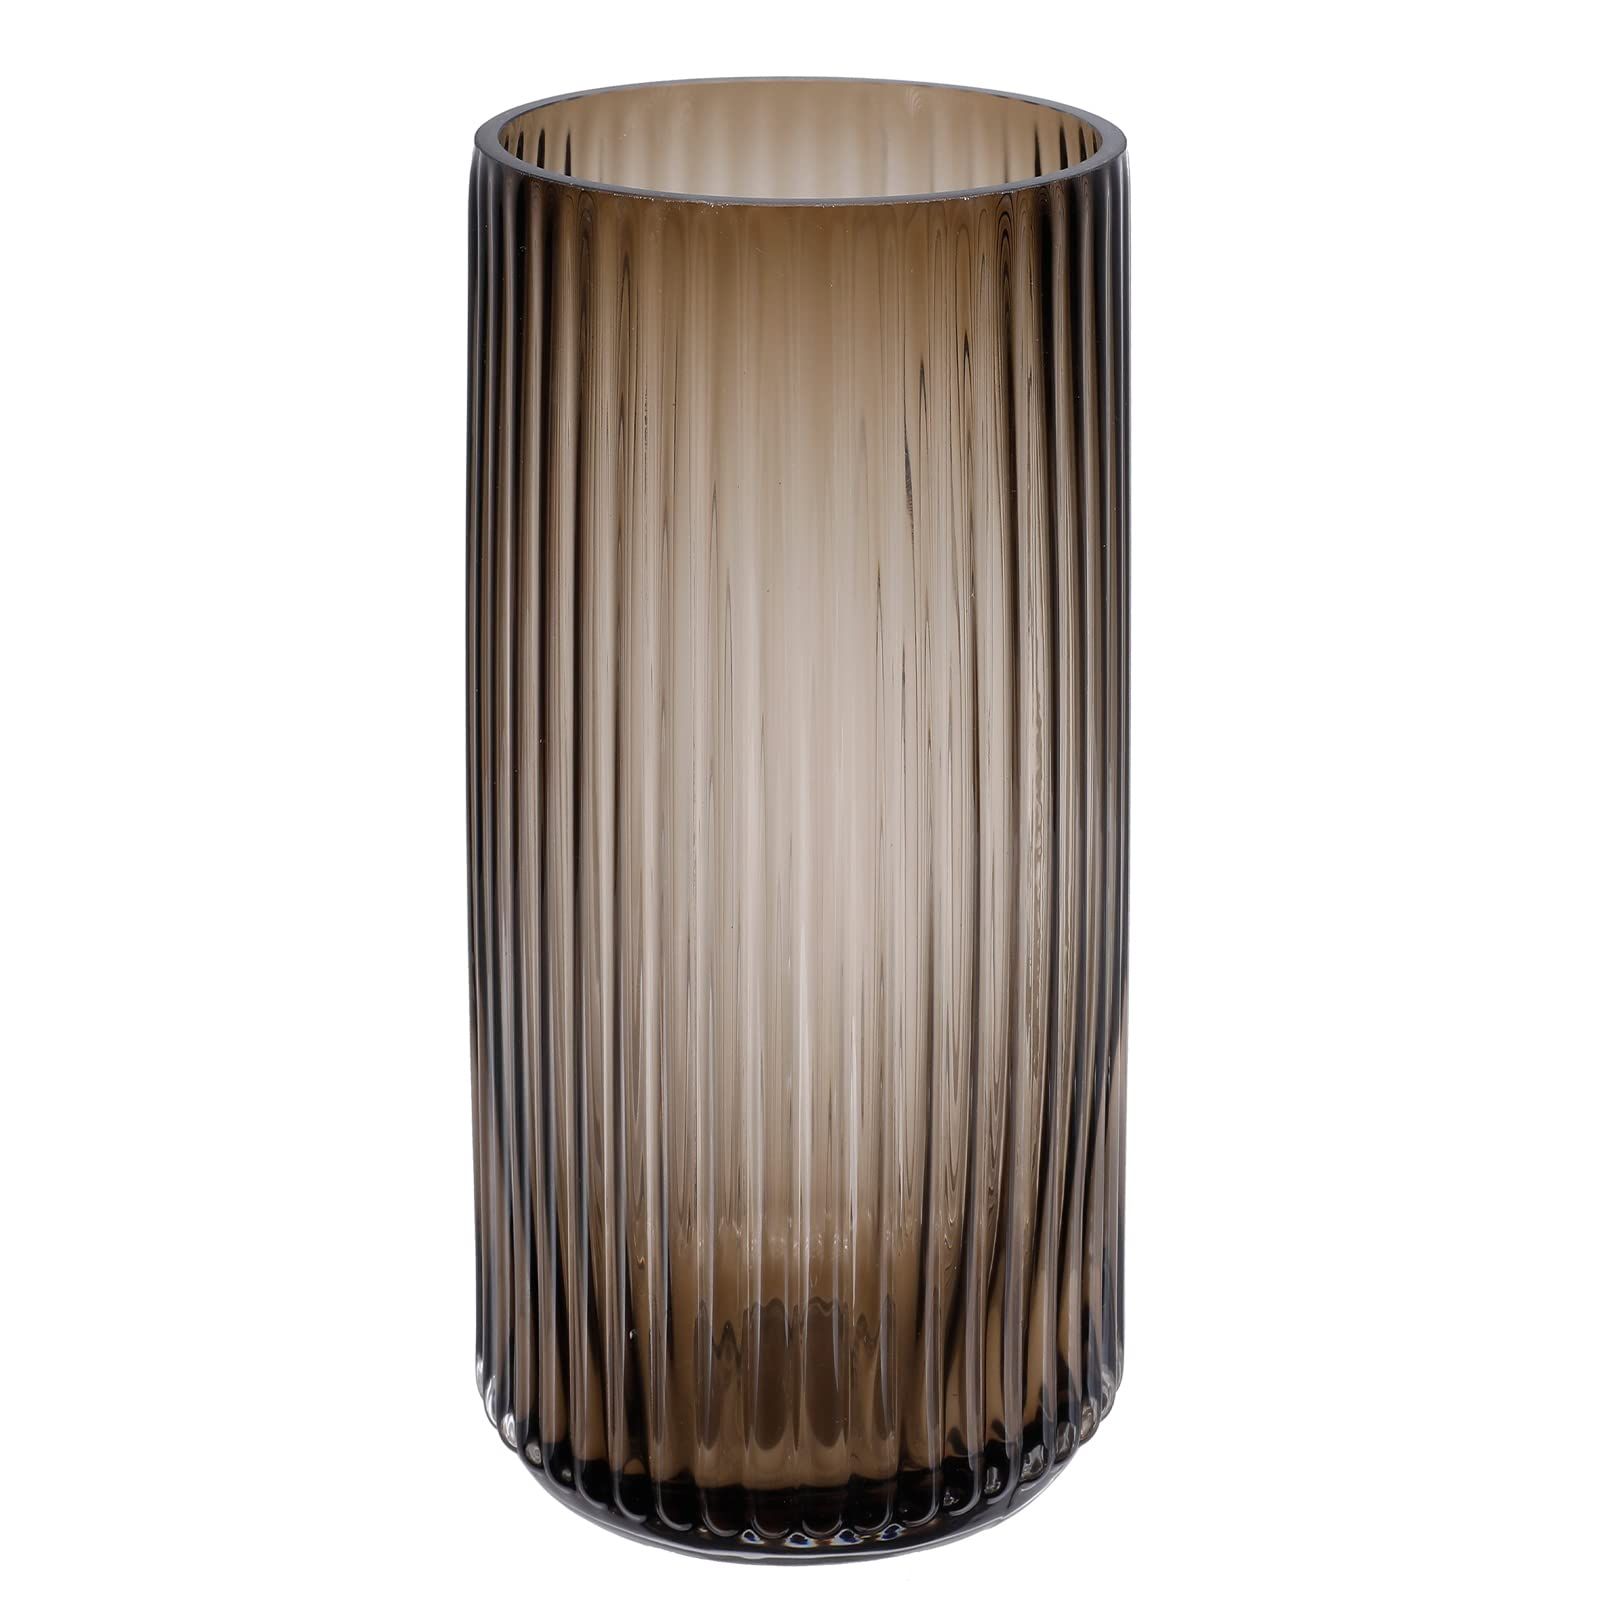 Flower Vase, Modern Fluted Large Round Glass Vase Brown for Home Office Desk Decor | Amazon (US)